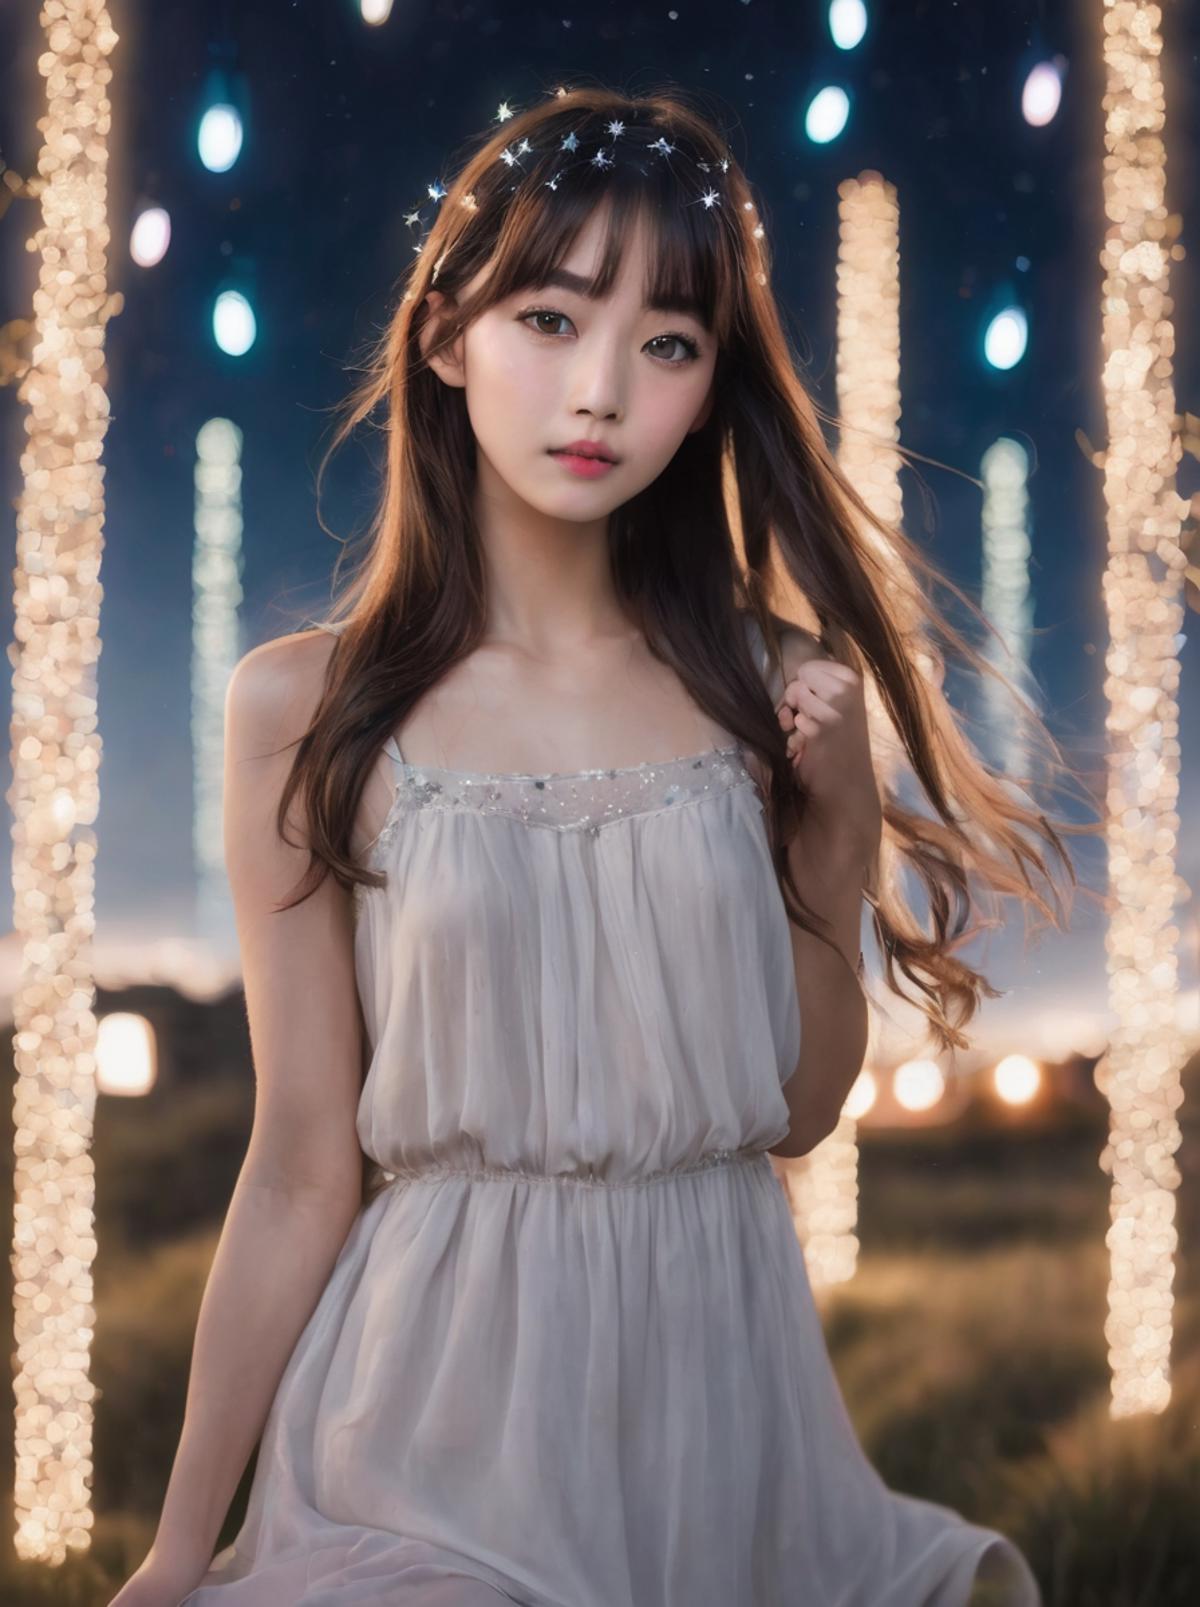 Japanese Girl - SDXL image by ld1222